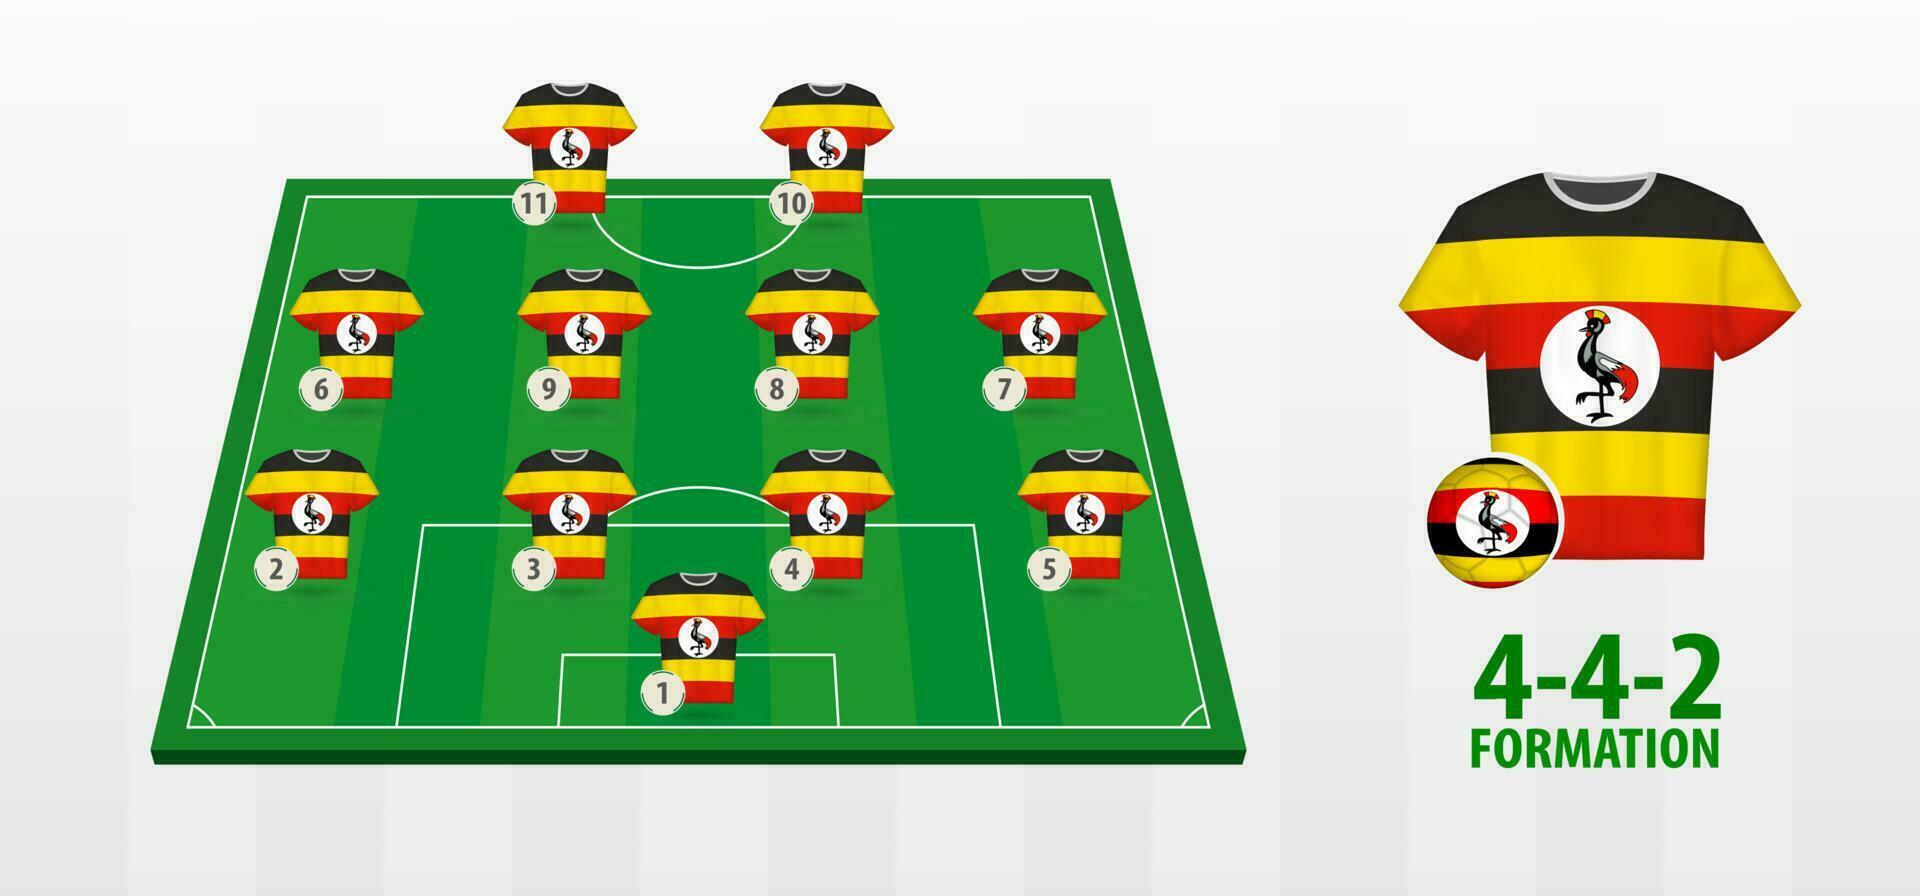 Uganda National Fußball Mannschaft Formation auf Fußball Feld. vektor